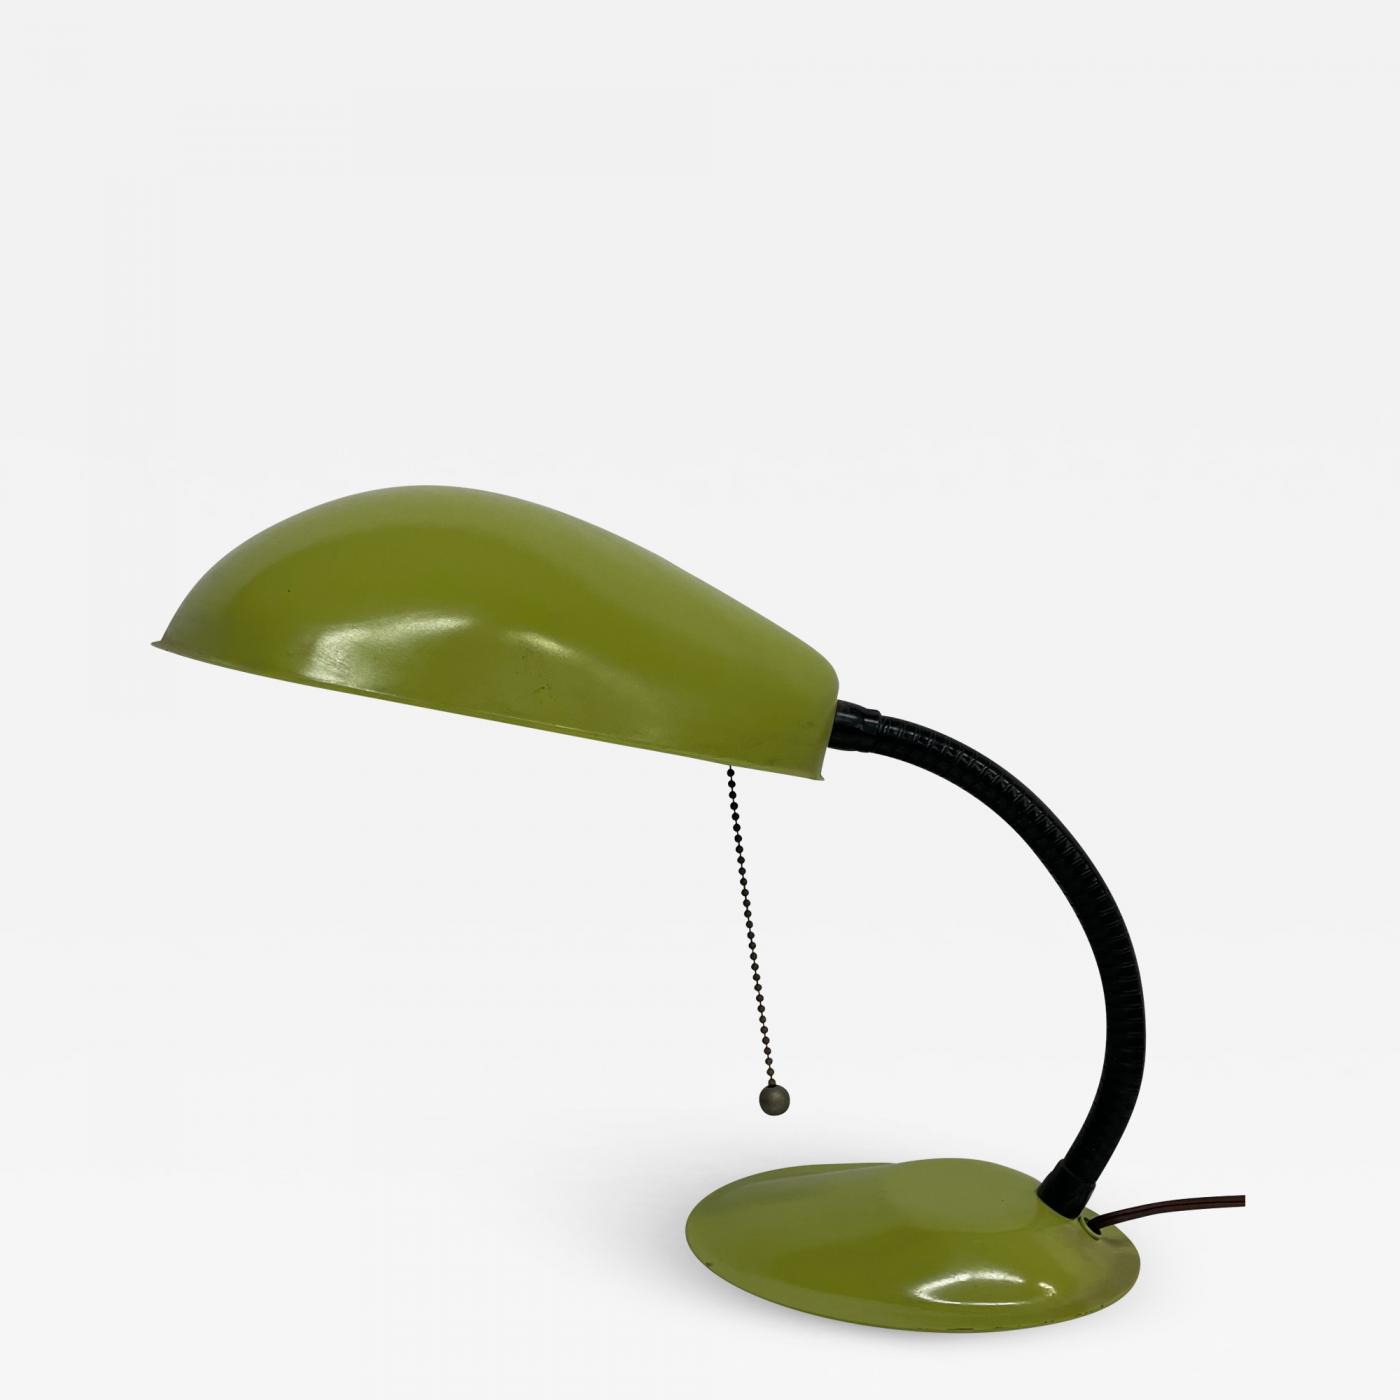 Rare Enameled Aluminum Cobra Table Lamp by Greta Magnusson Grossman For  Sale at 1stDibs